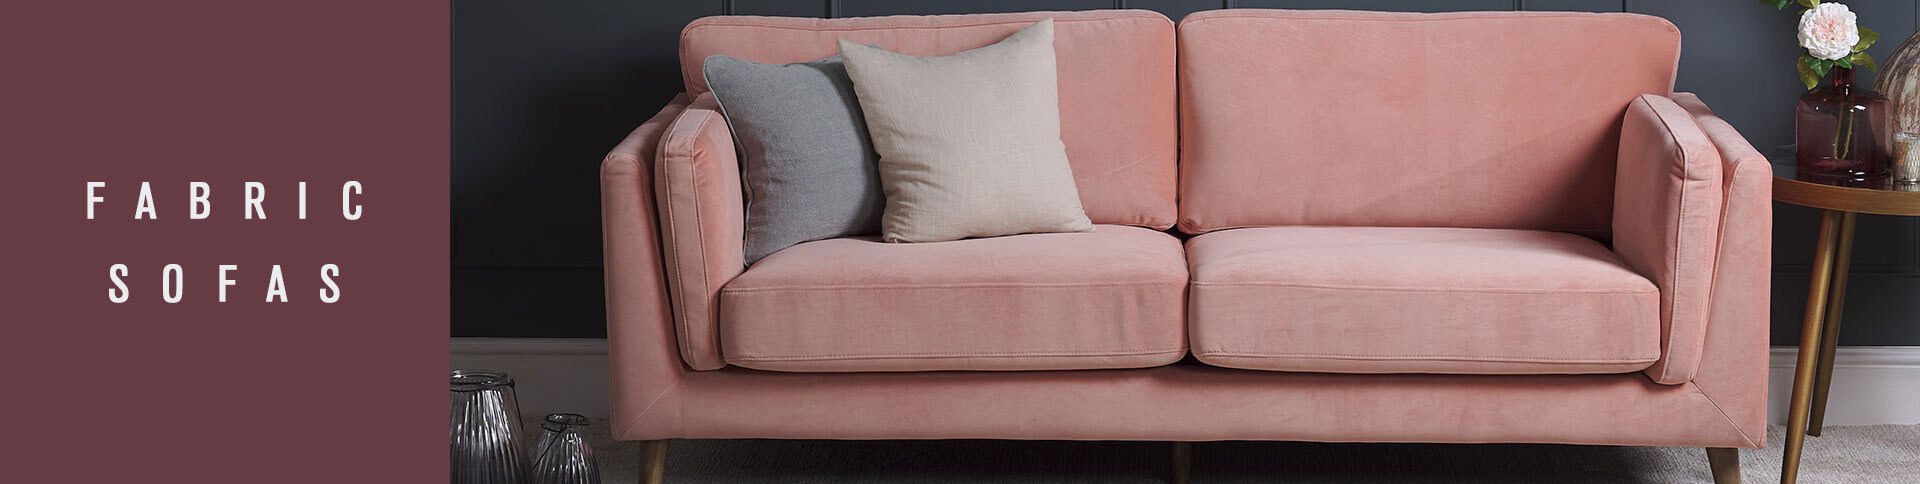 Fabric sofas 